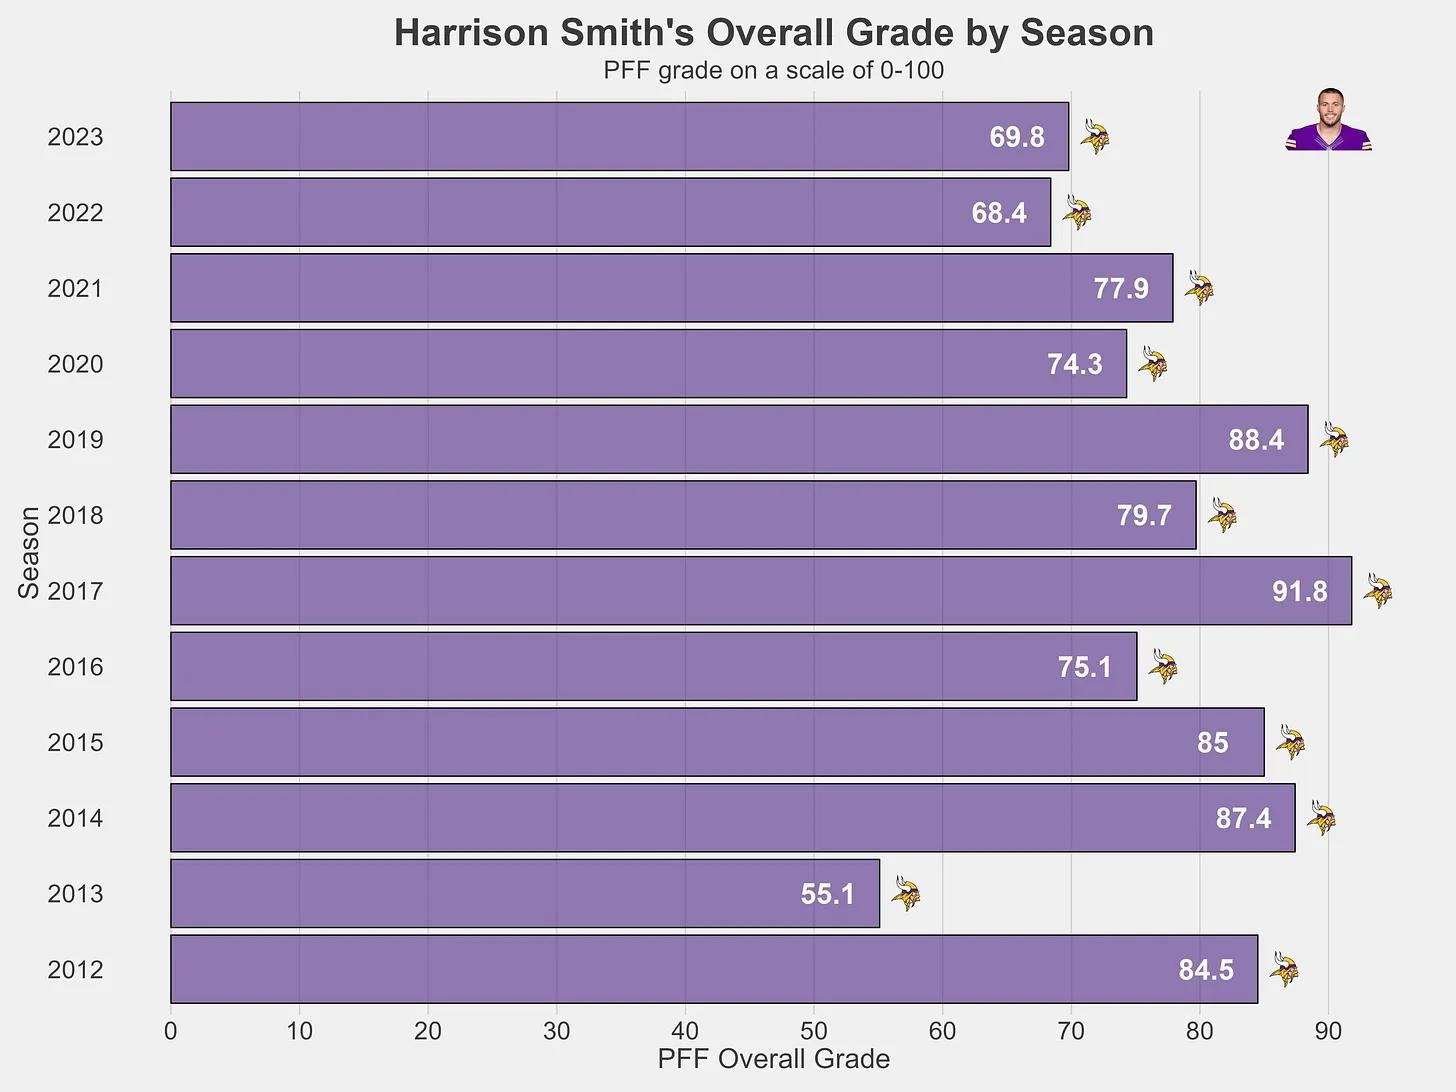 Harrison Smith's PFF grades by season.